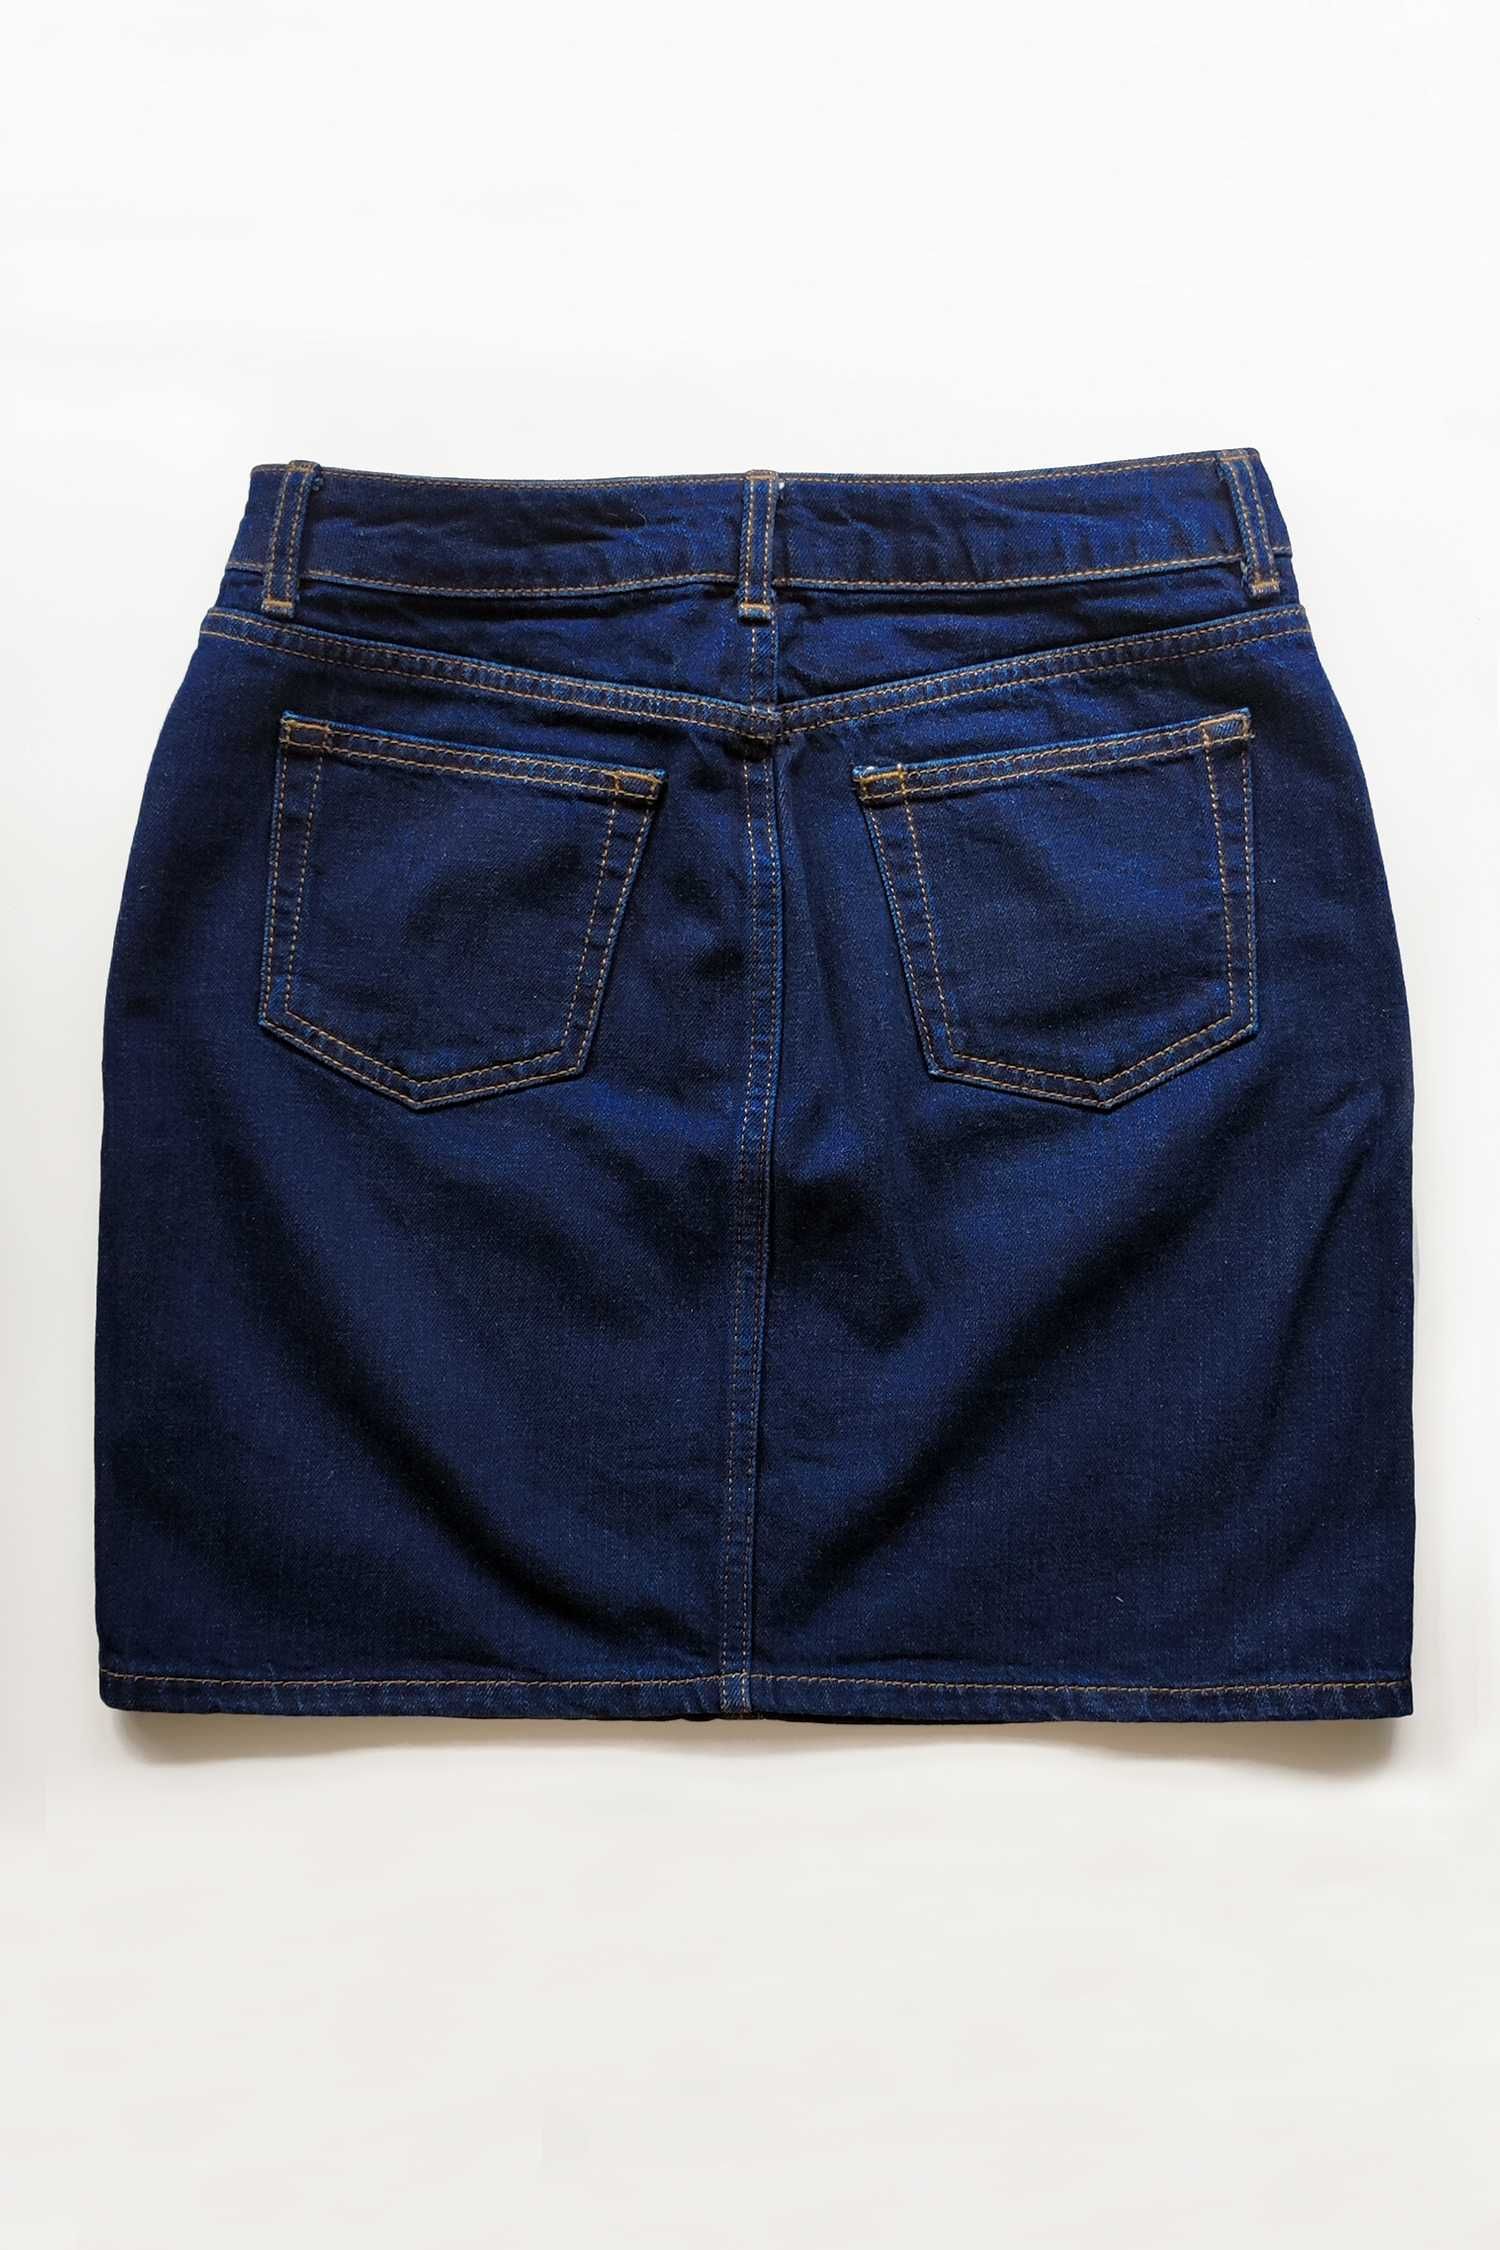 Bawełniana spódnica jeansowa mini granatowa dżins na zimę